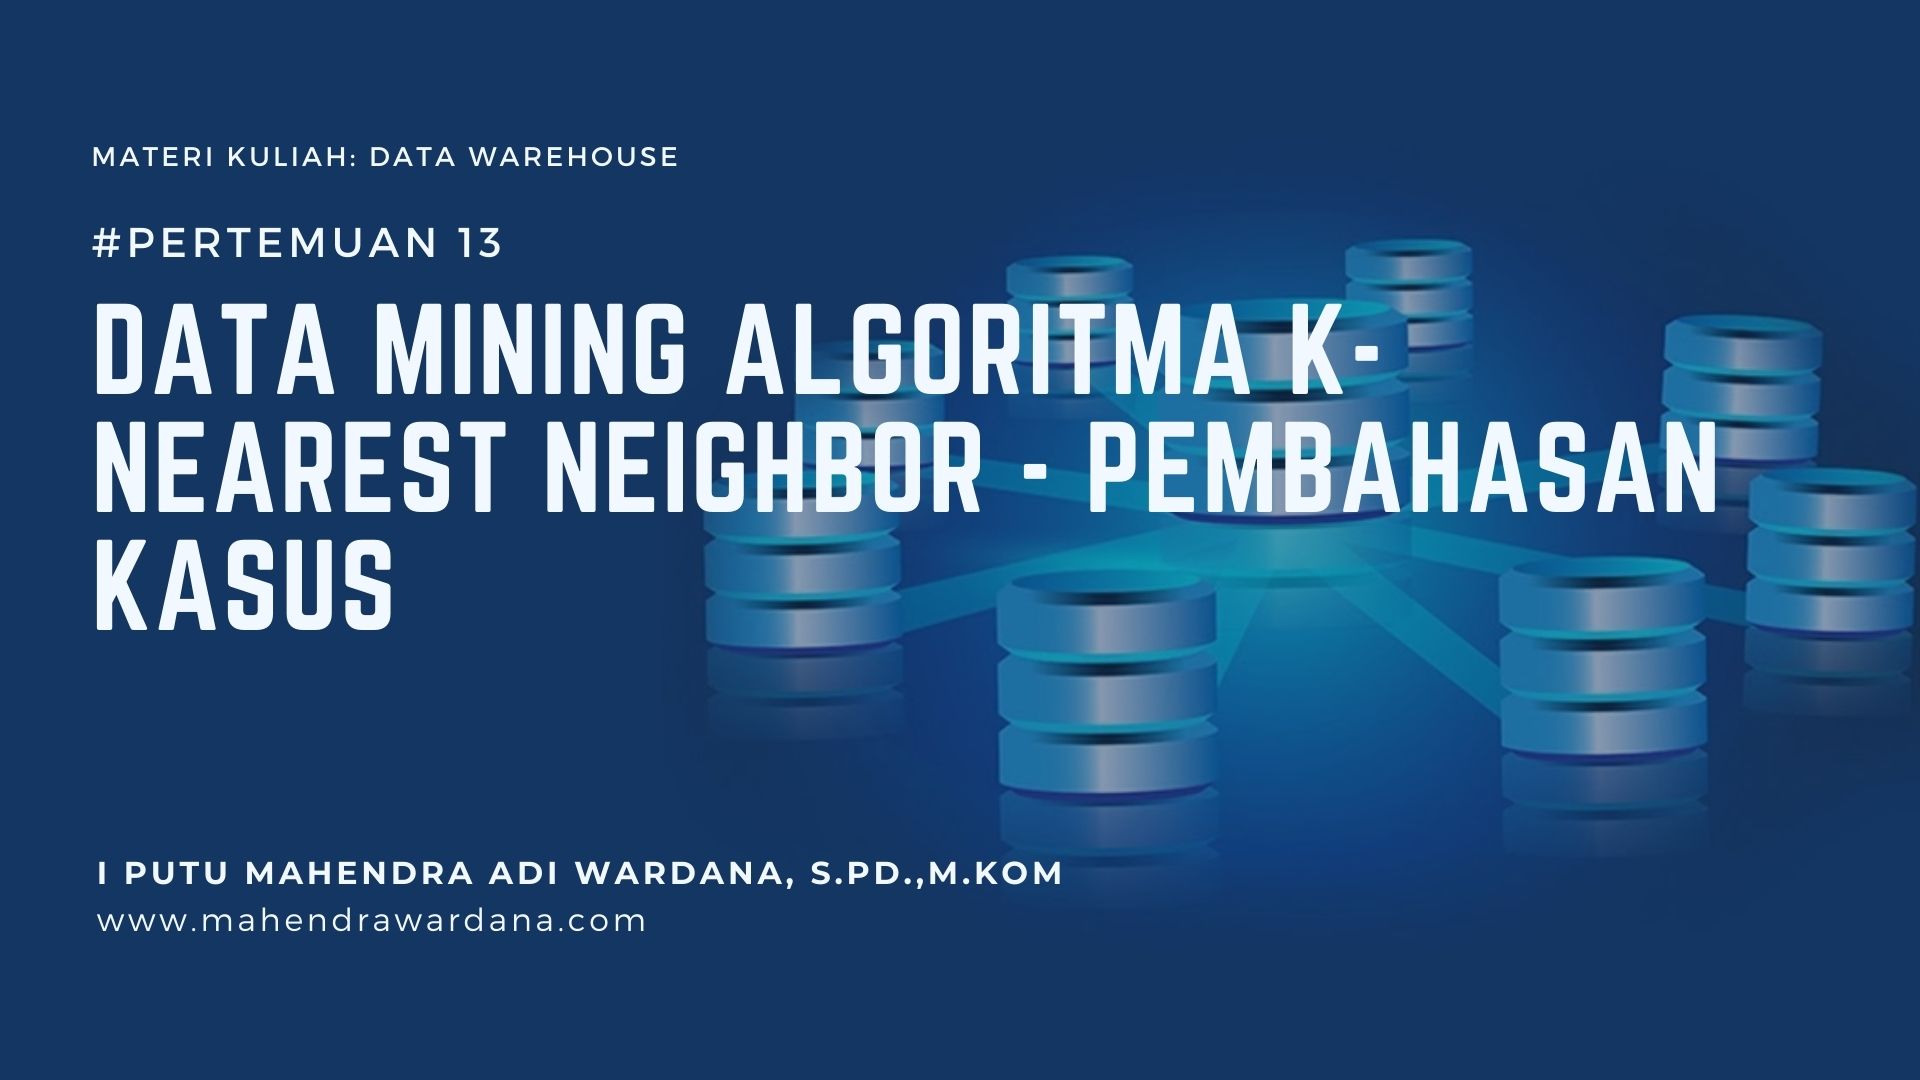 Pertemuan 13 - Data Mining Algoritma K-Nearest Neighbor - Pembahasan Kasus